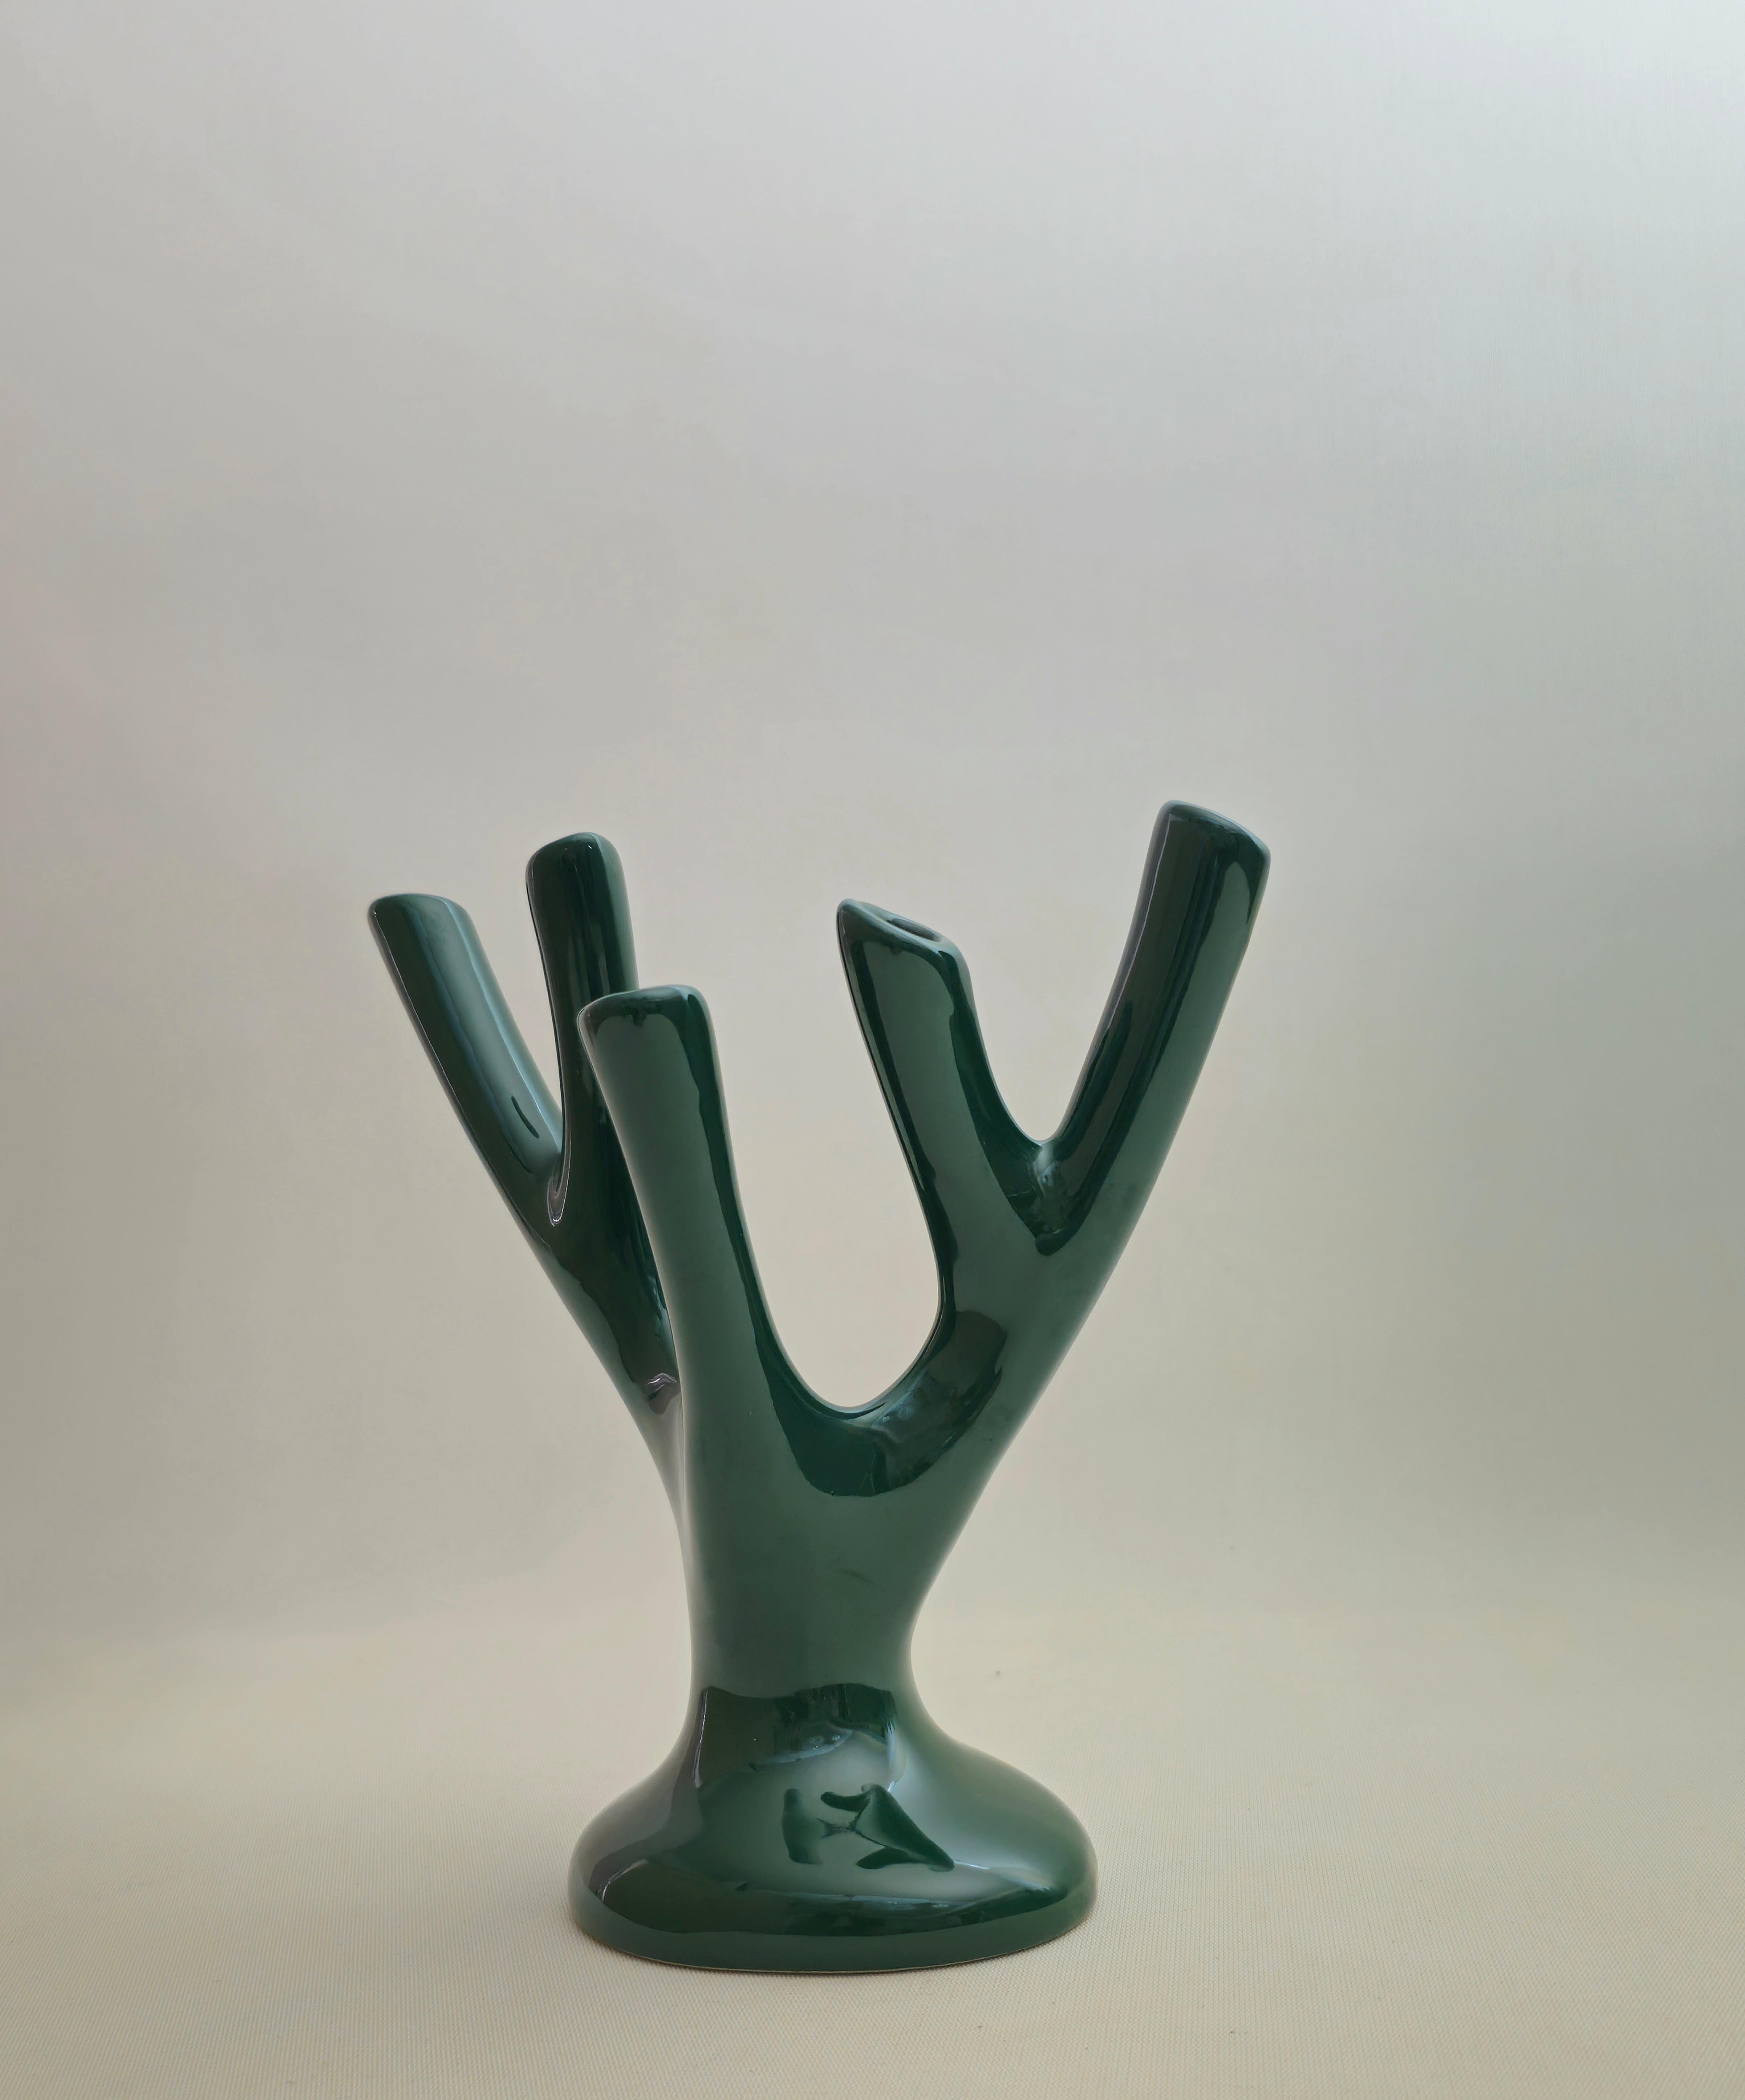 Vase Sculpture Gree Ceramic Coral Flower Holder Midcentury Italian Design, 1970s For Sale 4